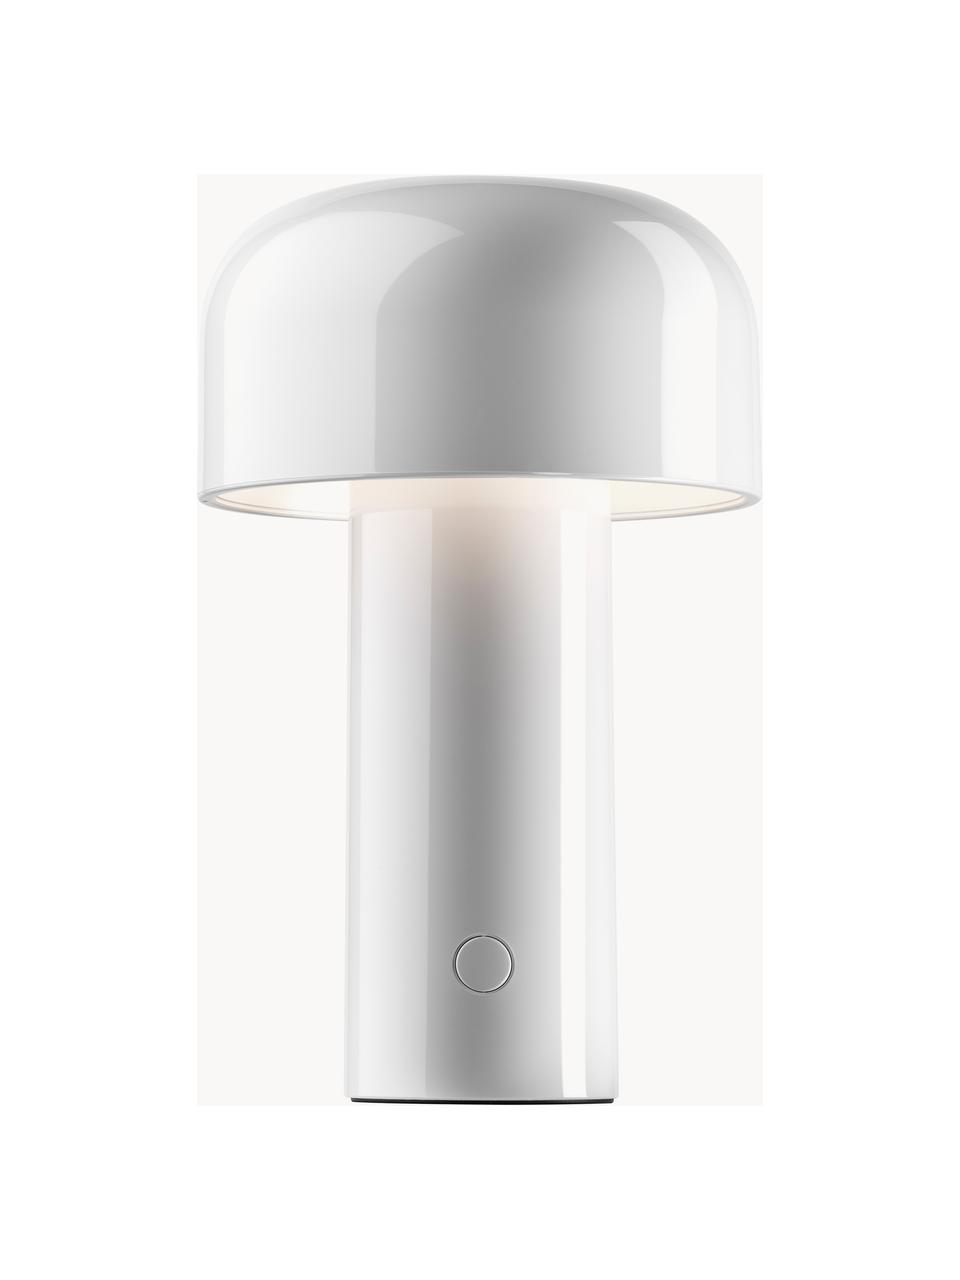 Lampada da tavolo a LED luce regolabile Bellhop, Plastica, Bianco lucido, Ø 13 x Alt. 20 cm